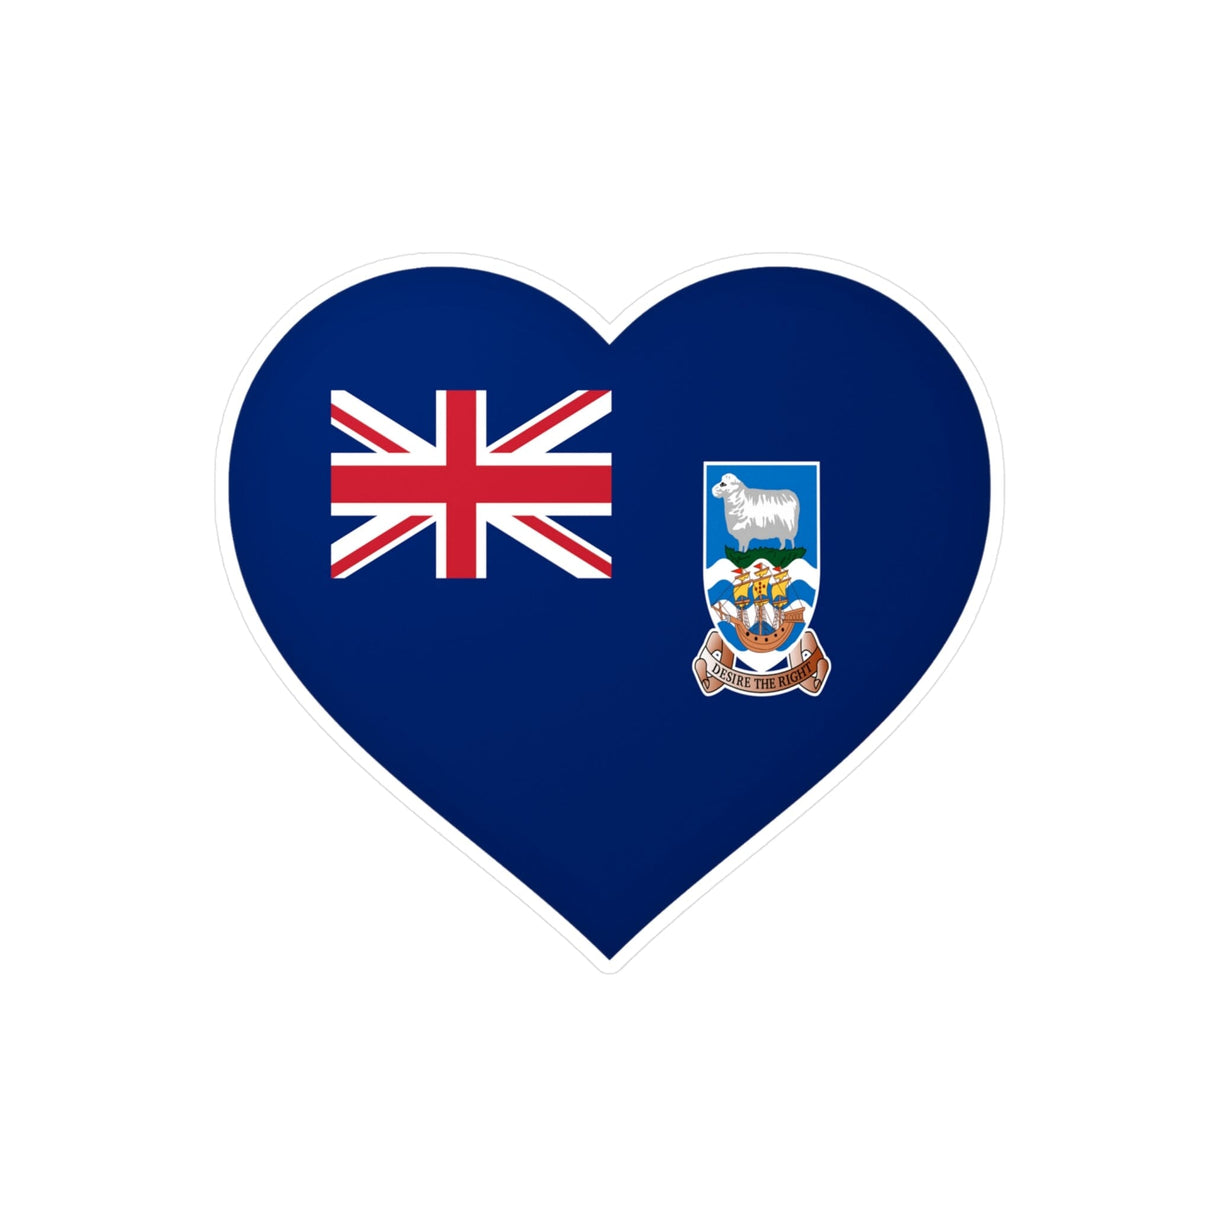 Falkland Islands Flag Heart Sticker in Multiple Sizes - Pixelforma